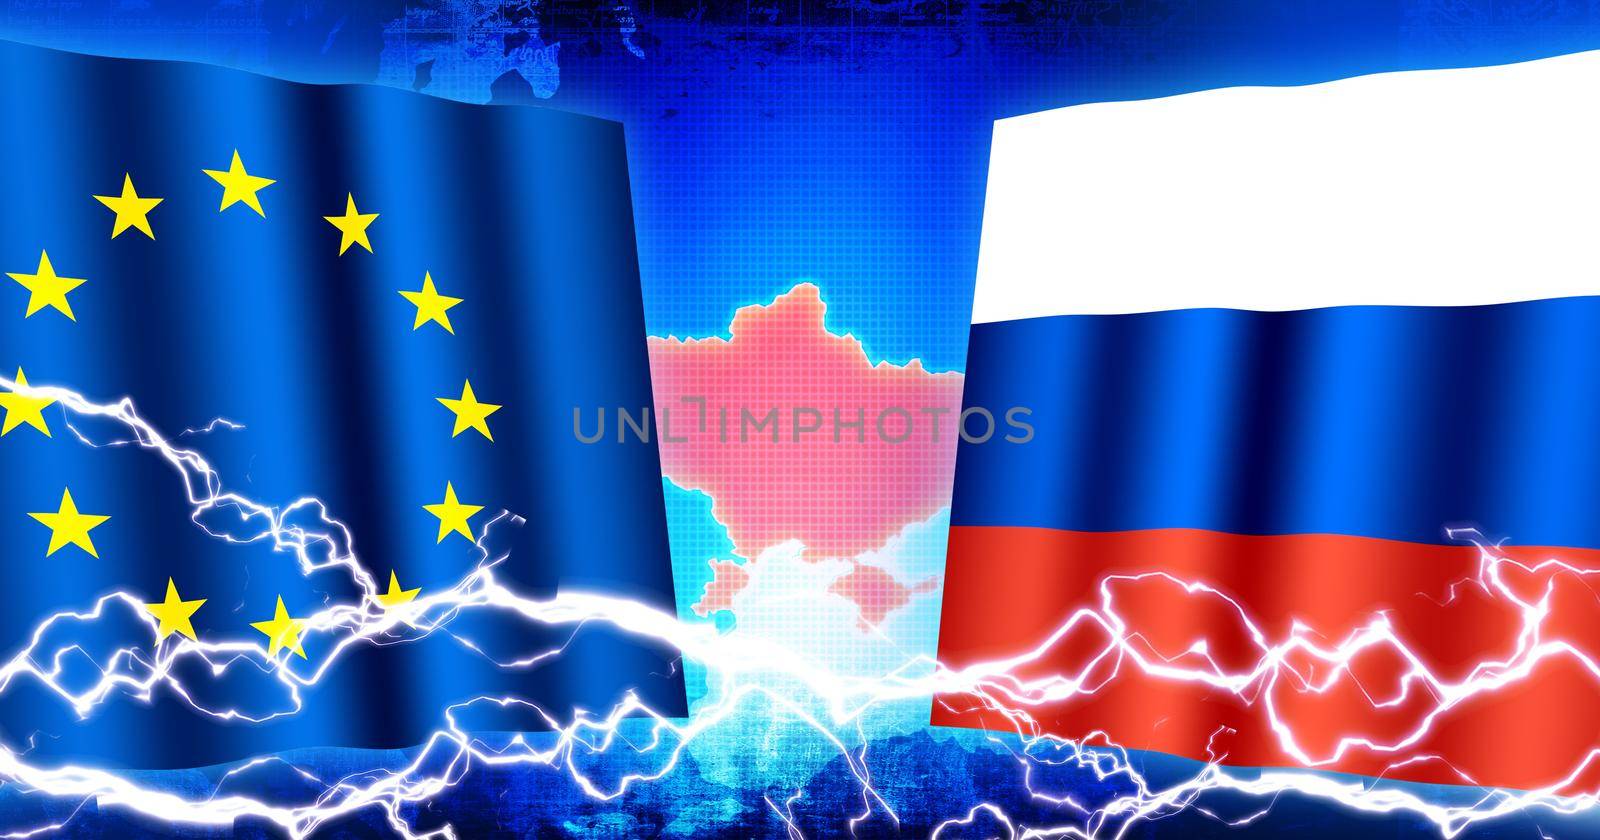 Russia vs EU (Russo-Ukrainian War ). Web banner illustration